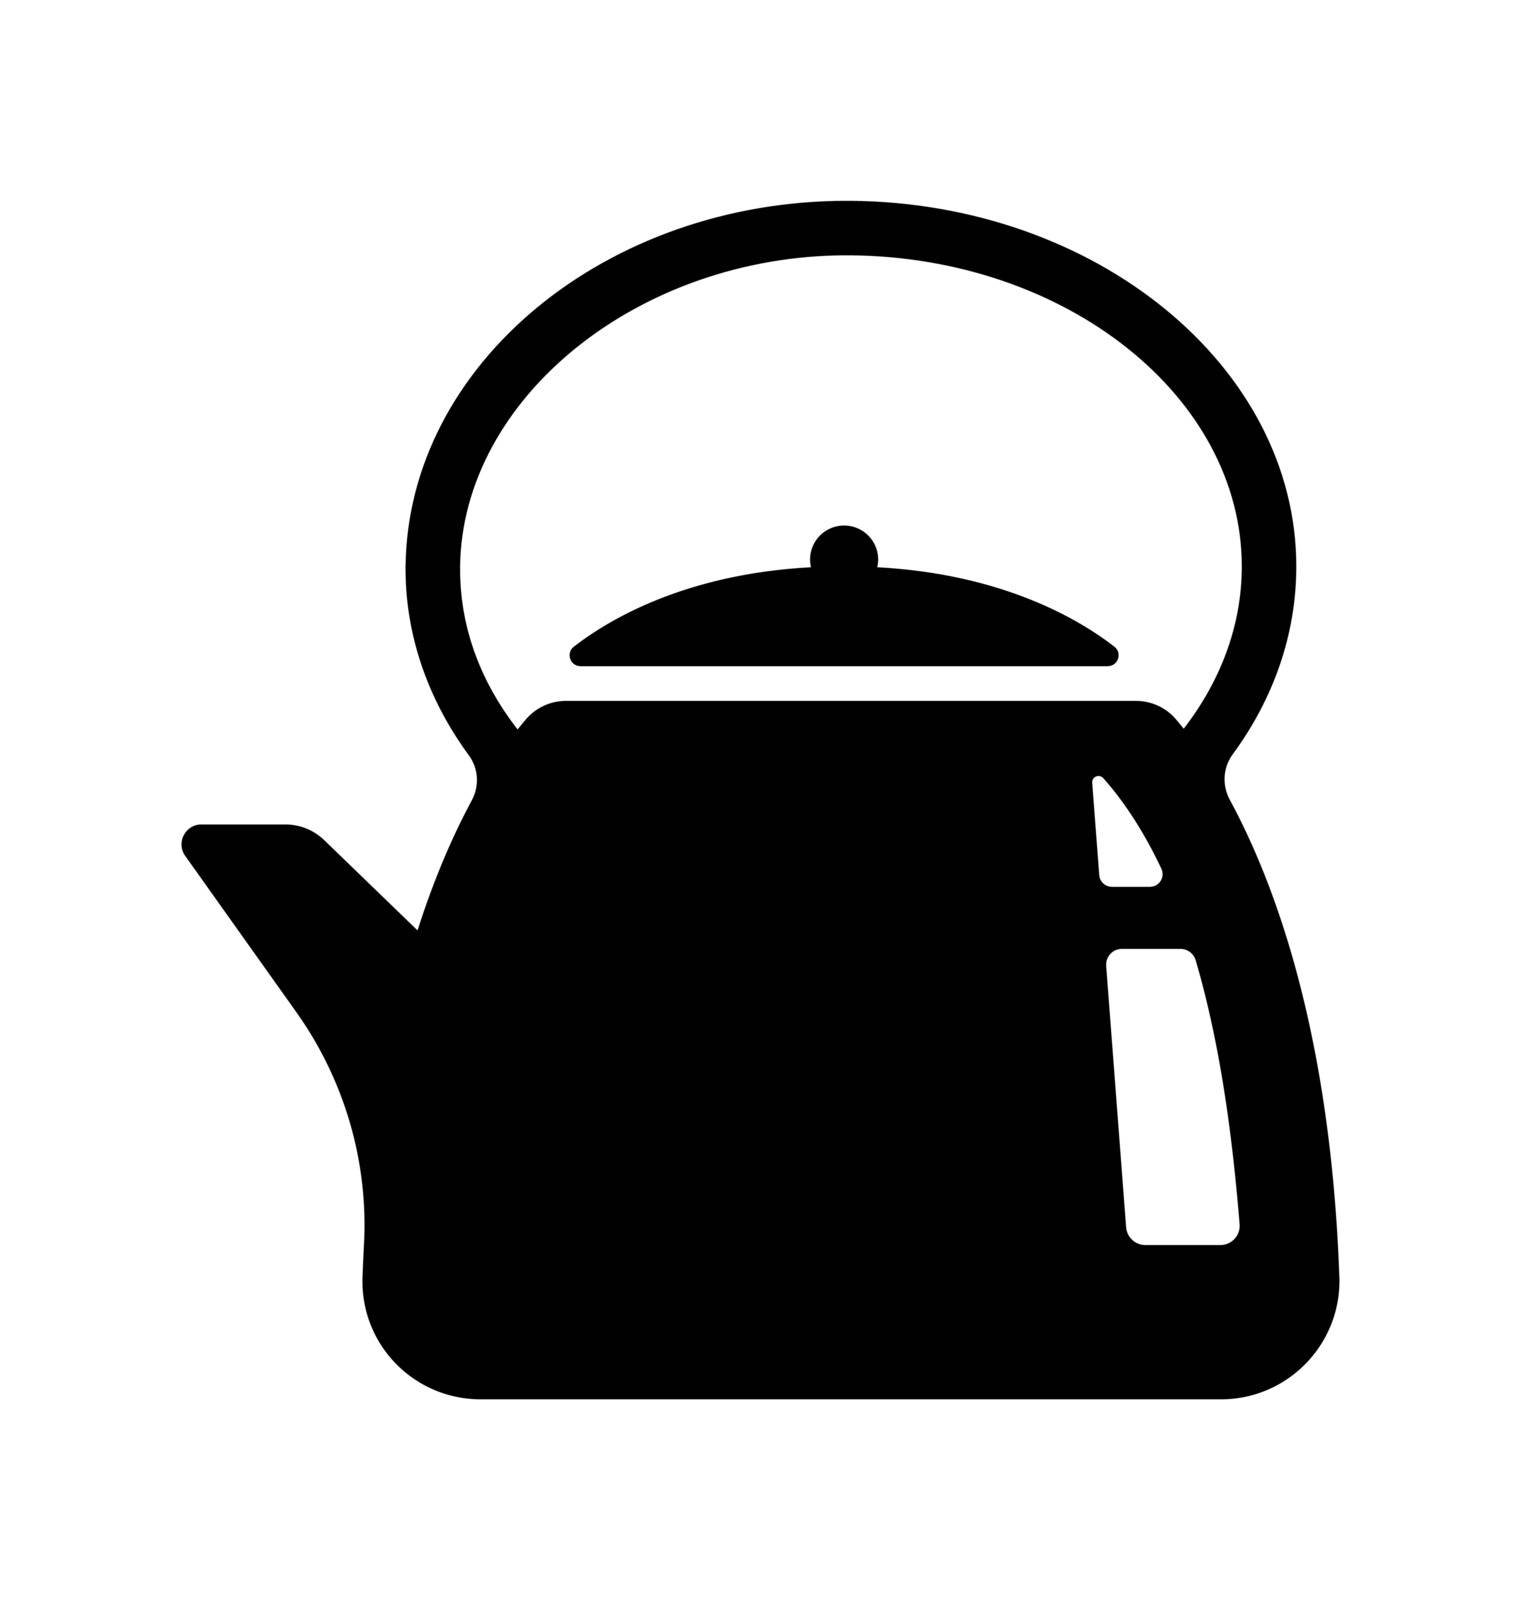 Kettle , teapot, kitchen vector icon illustration by barks